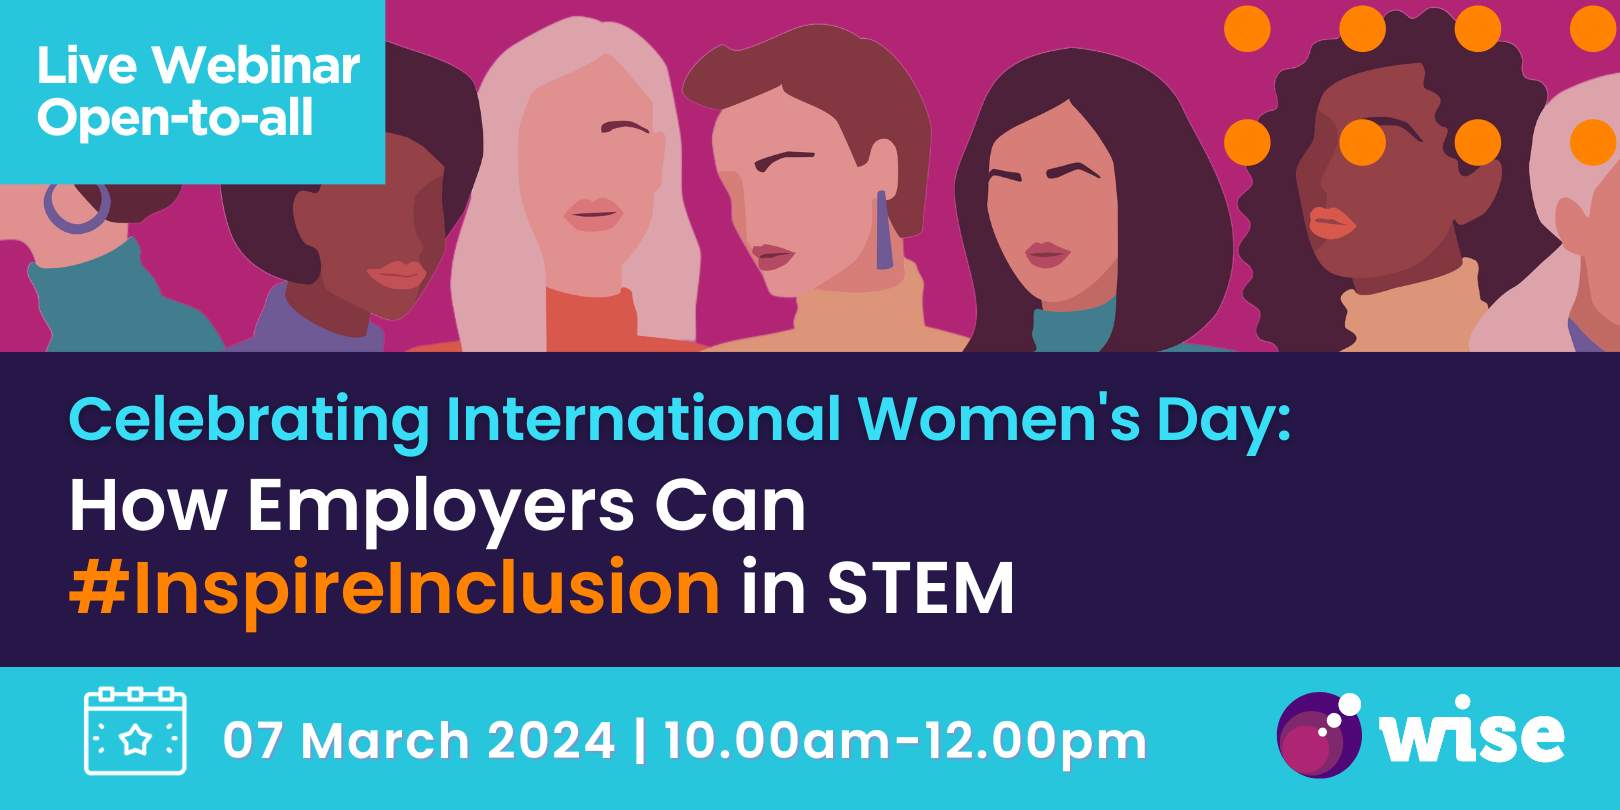 International Women's Day Inspire Inclusion in STEM